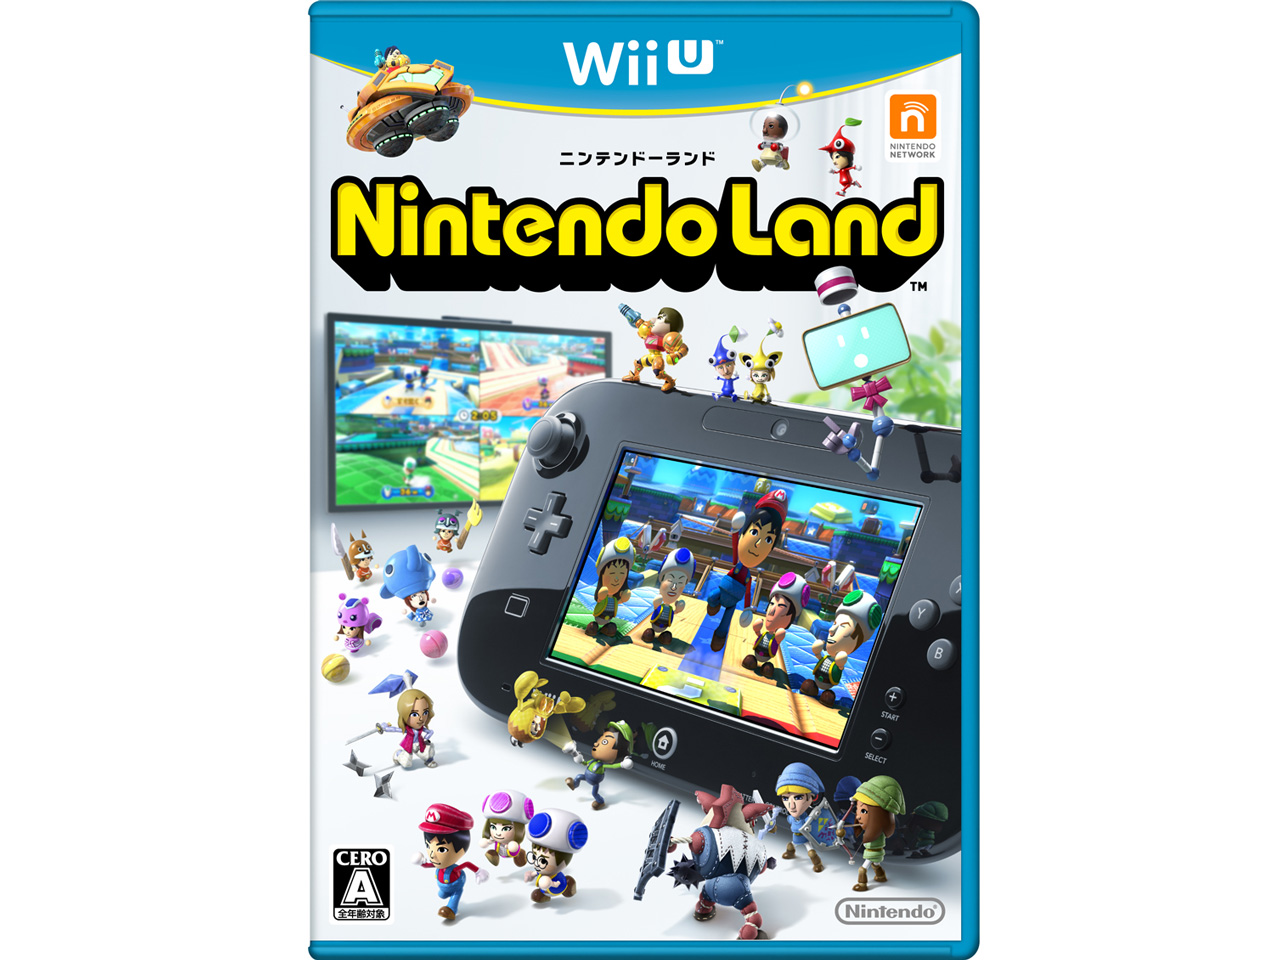 Wiiu Nintendo Land激安 最安値 在庫あり で買える 情報 Wii U マリオブラザーズ モンハン 任天堂ランドなど 在庫あり 買える購入速報 楽天ブログ